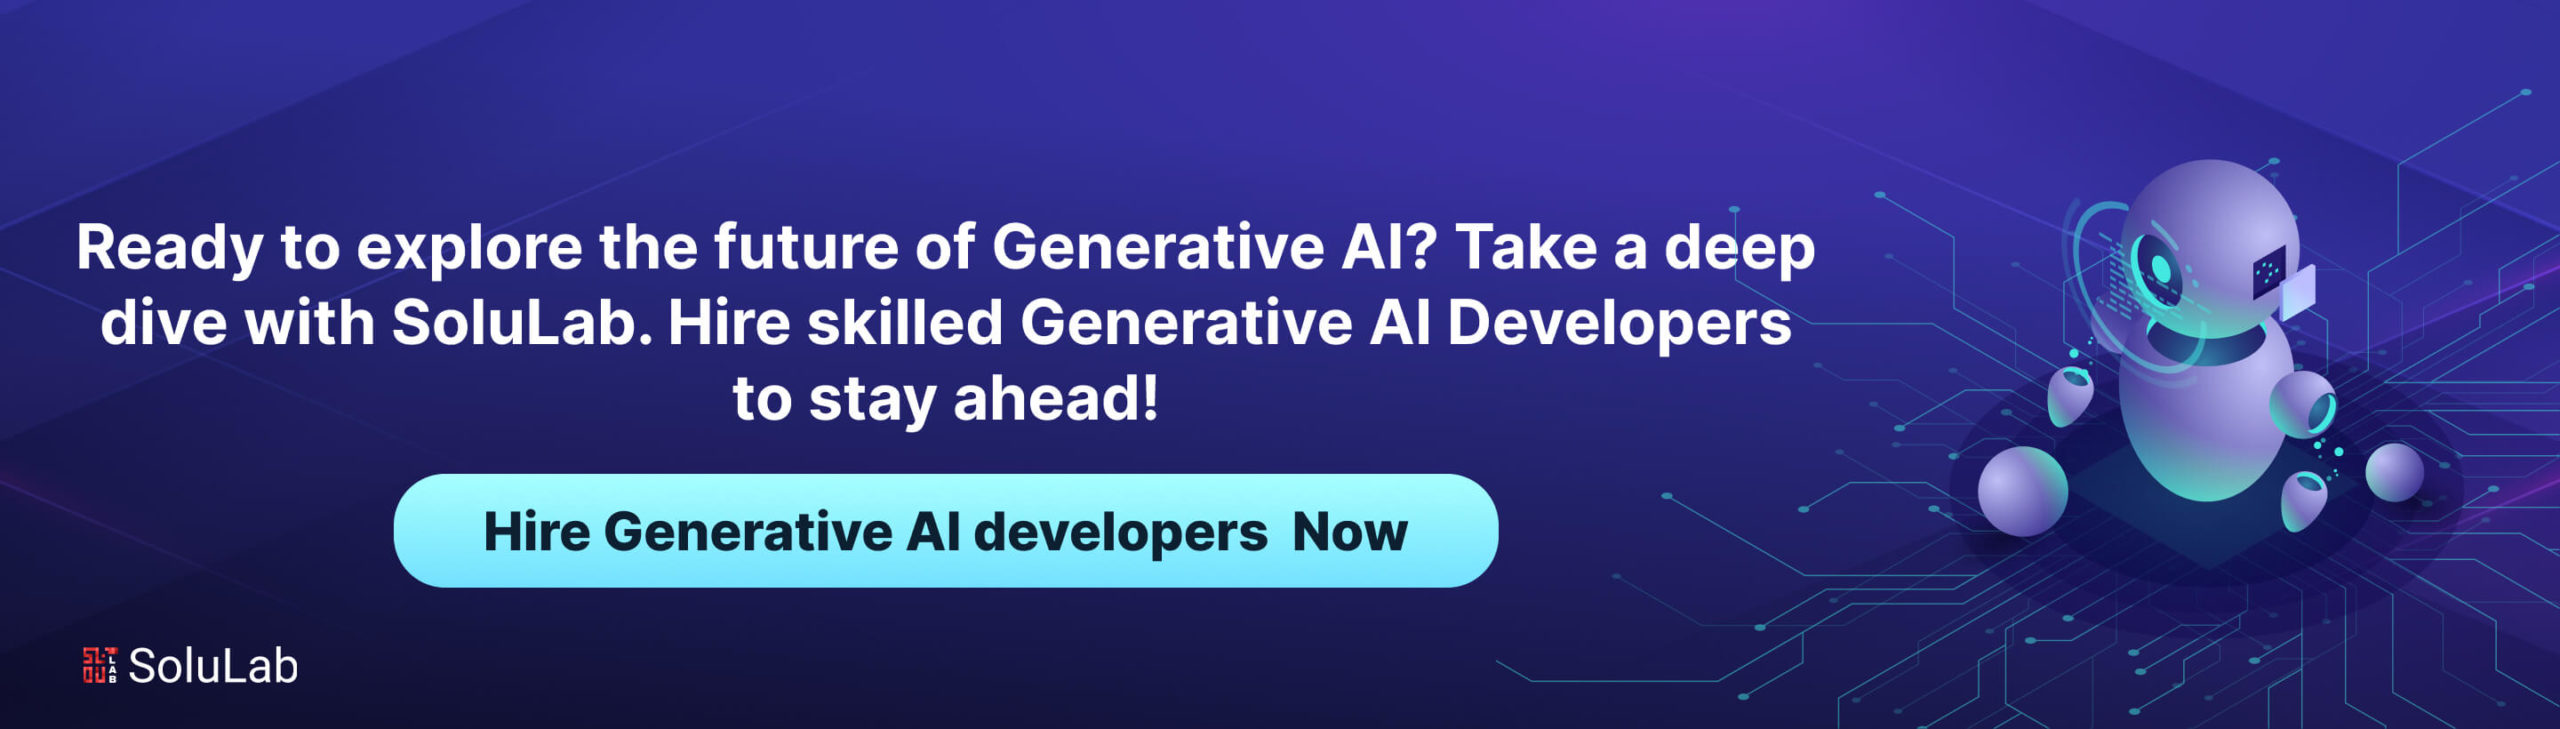 Hire Generative AI Developers